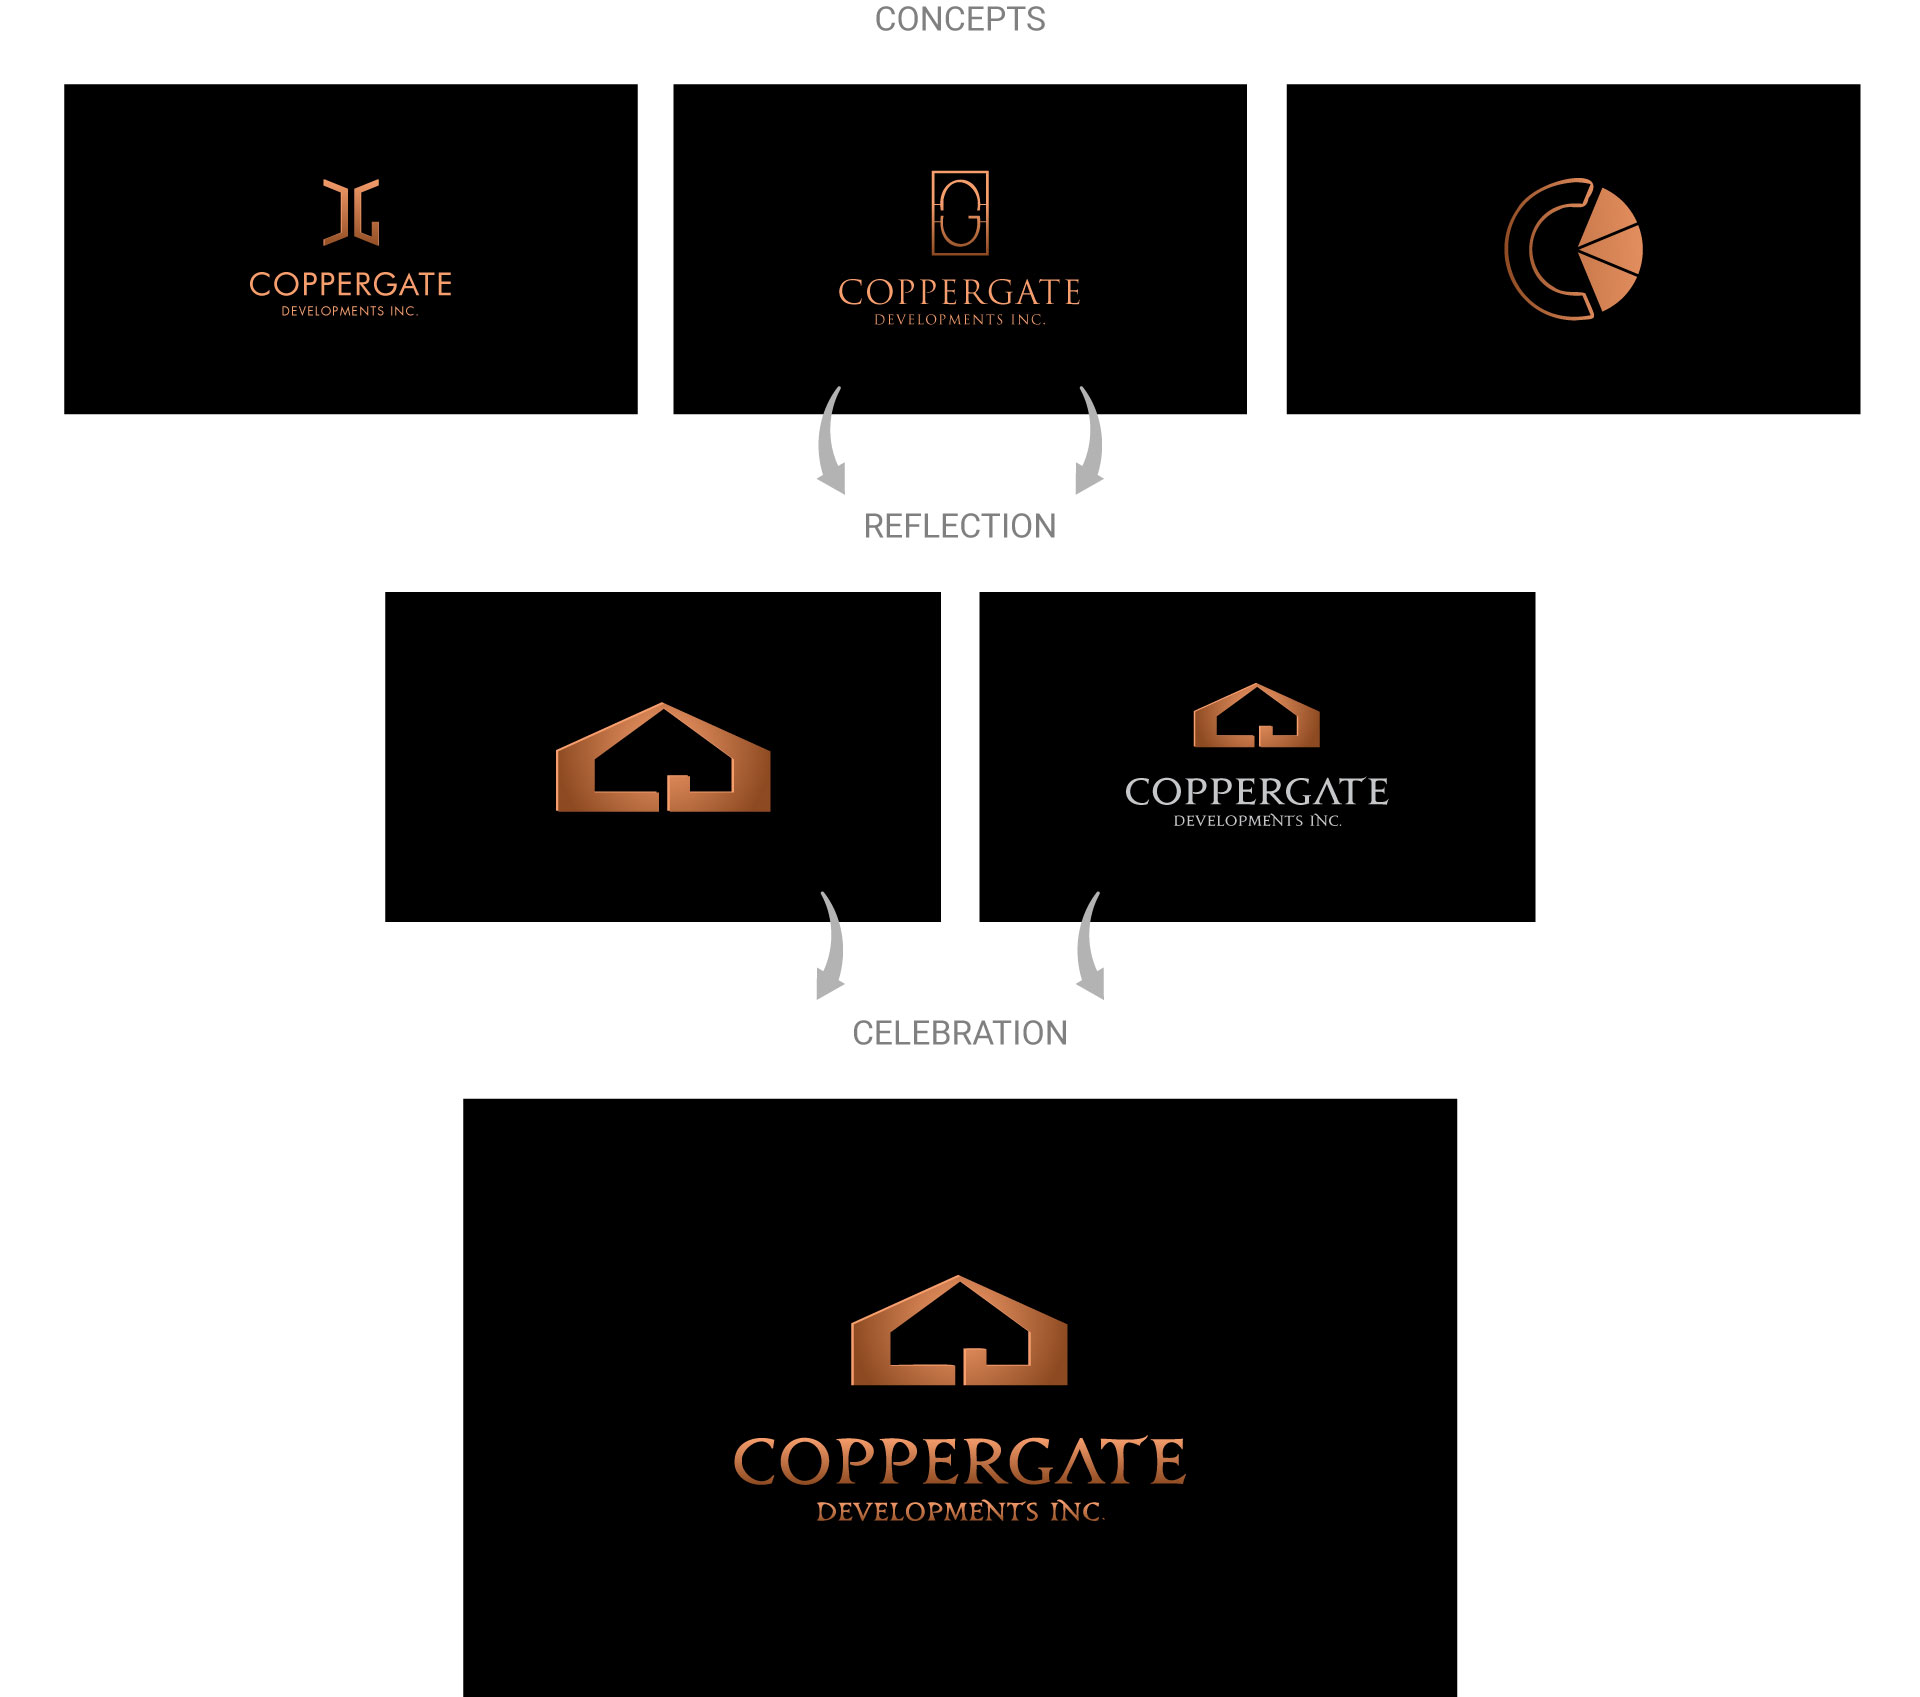 coppergate-logo-design-process-by-mapleweb-vancouver-canada